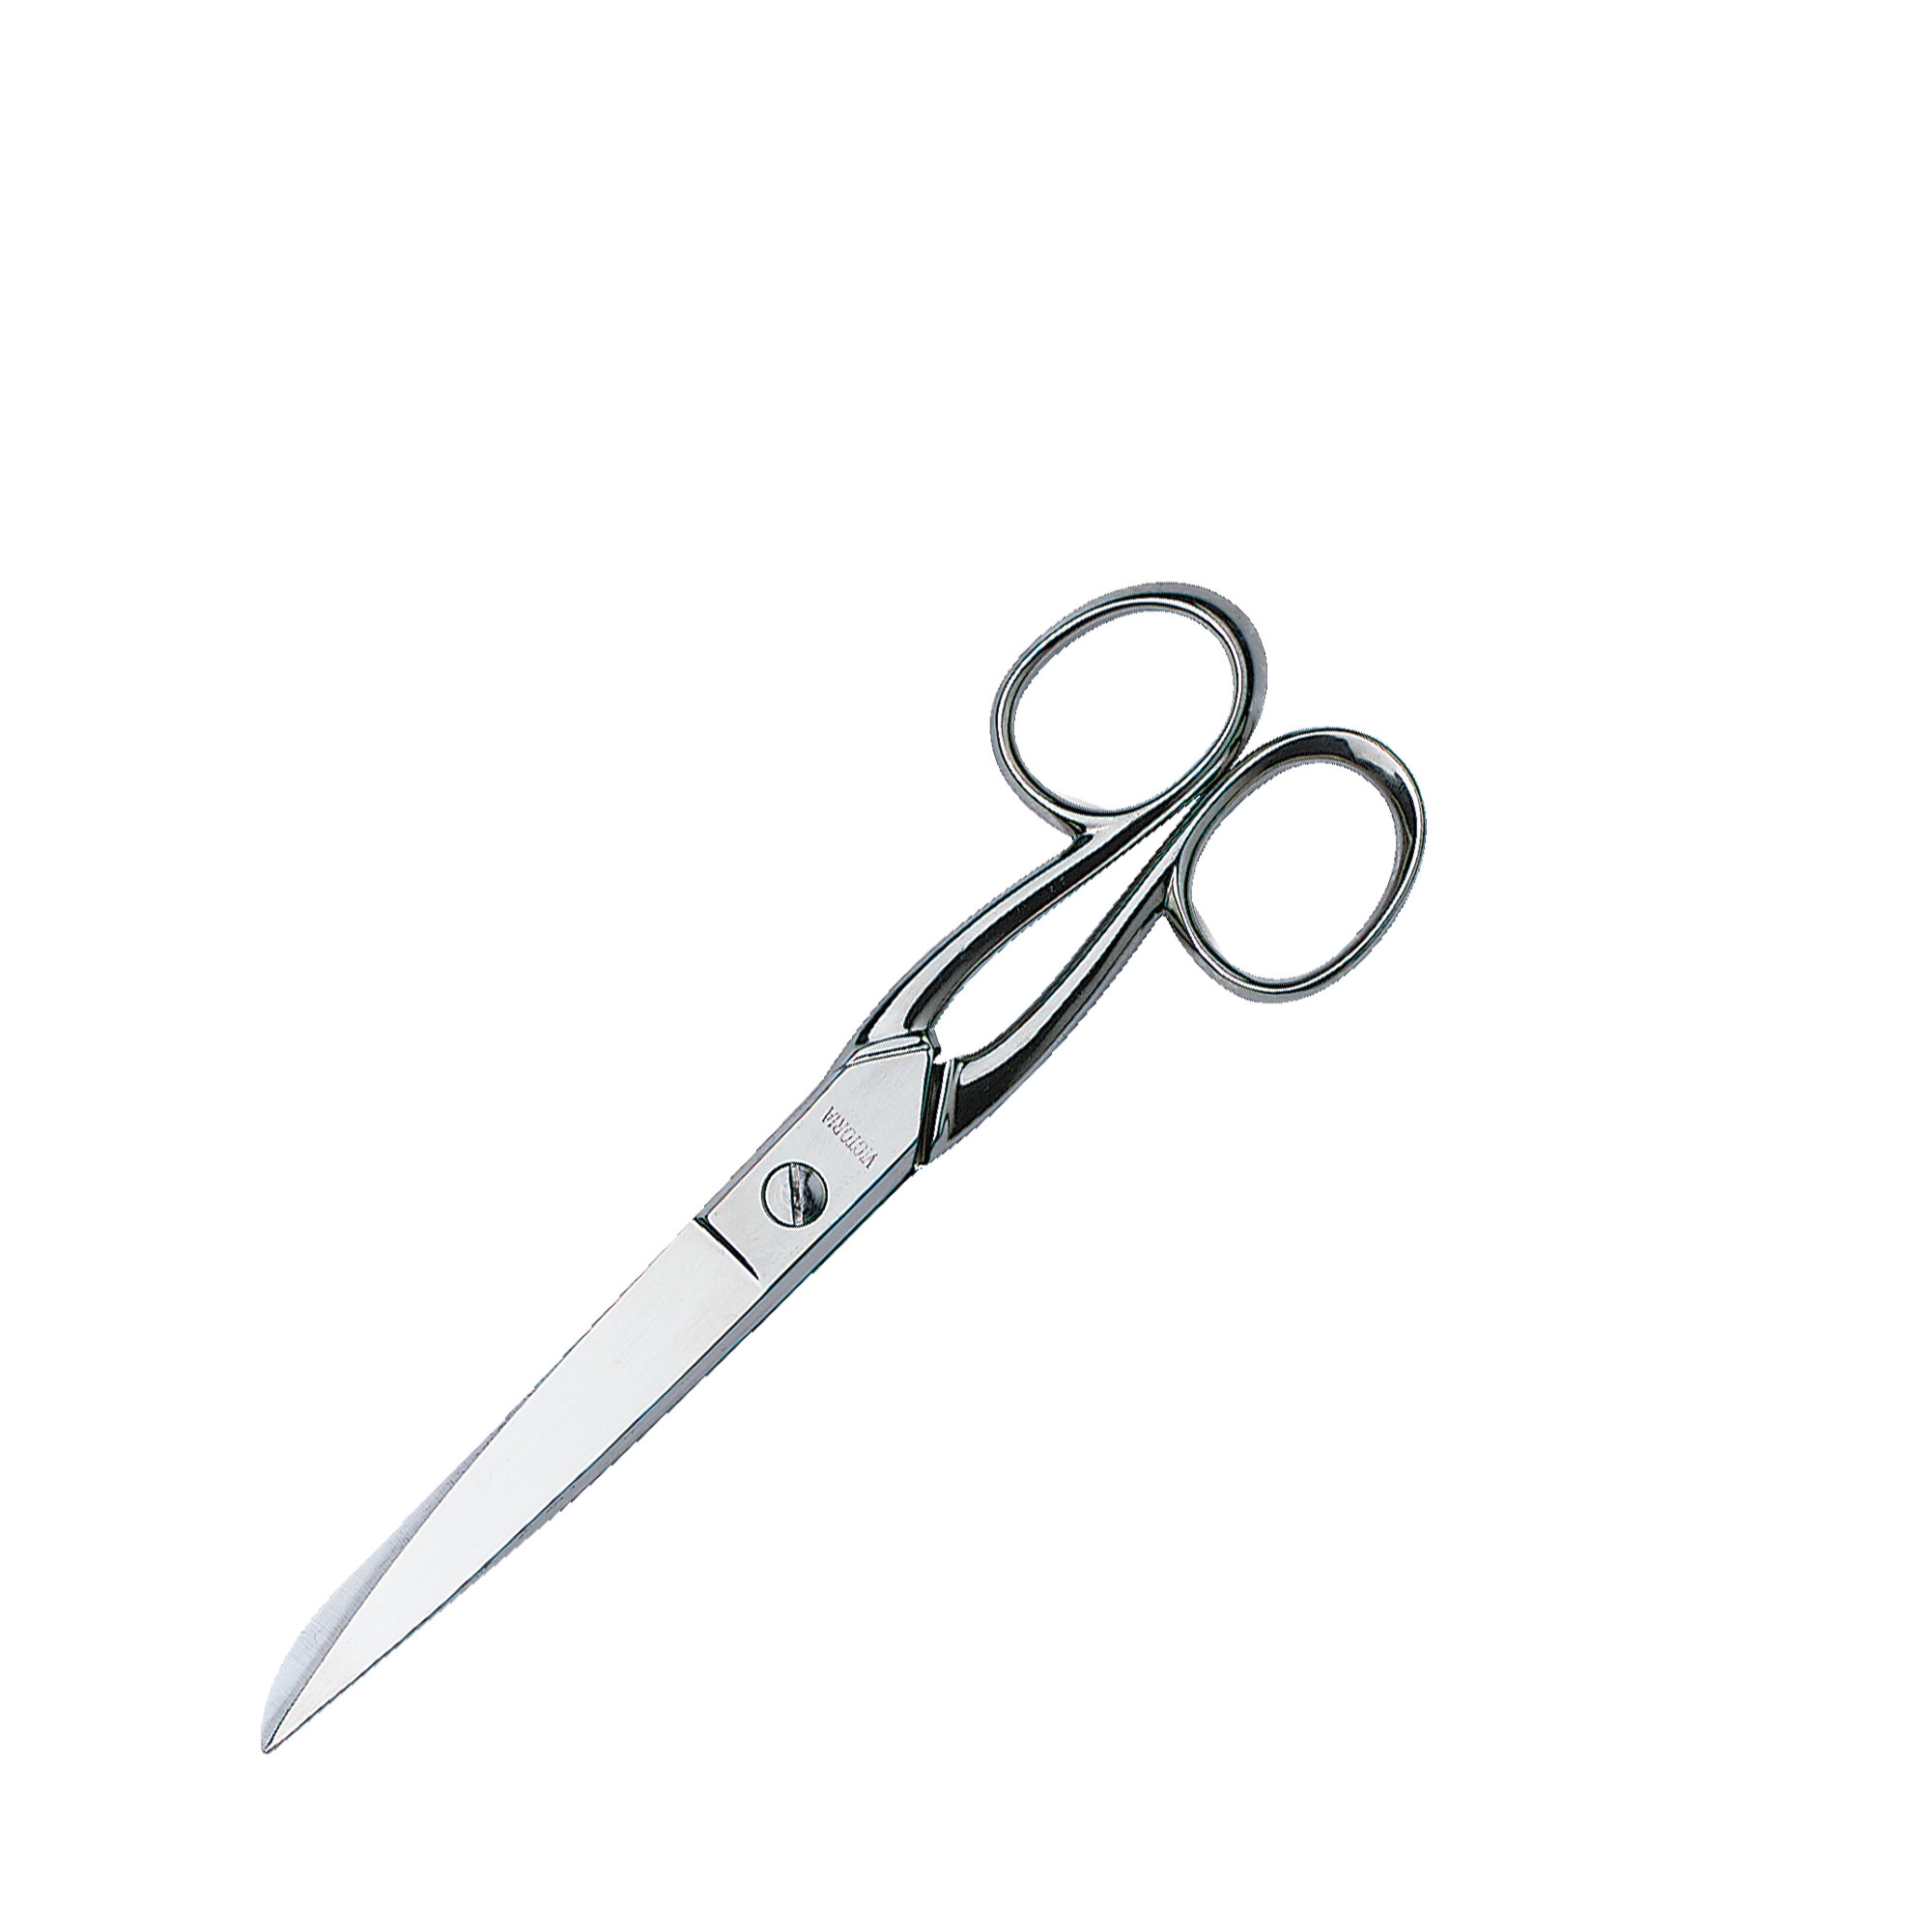 Victorinox - Household scissors "France